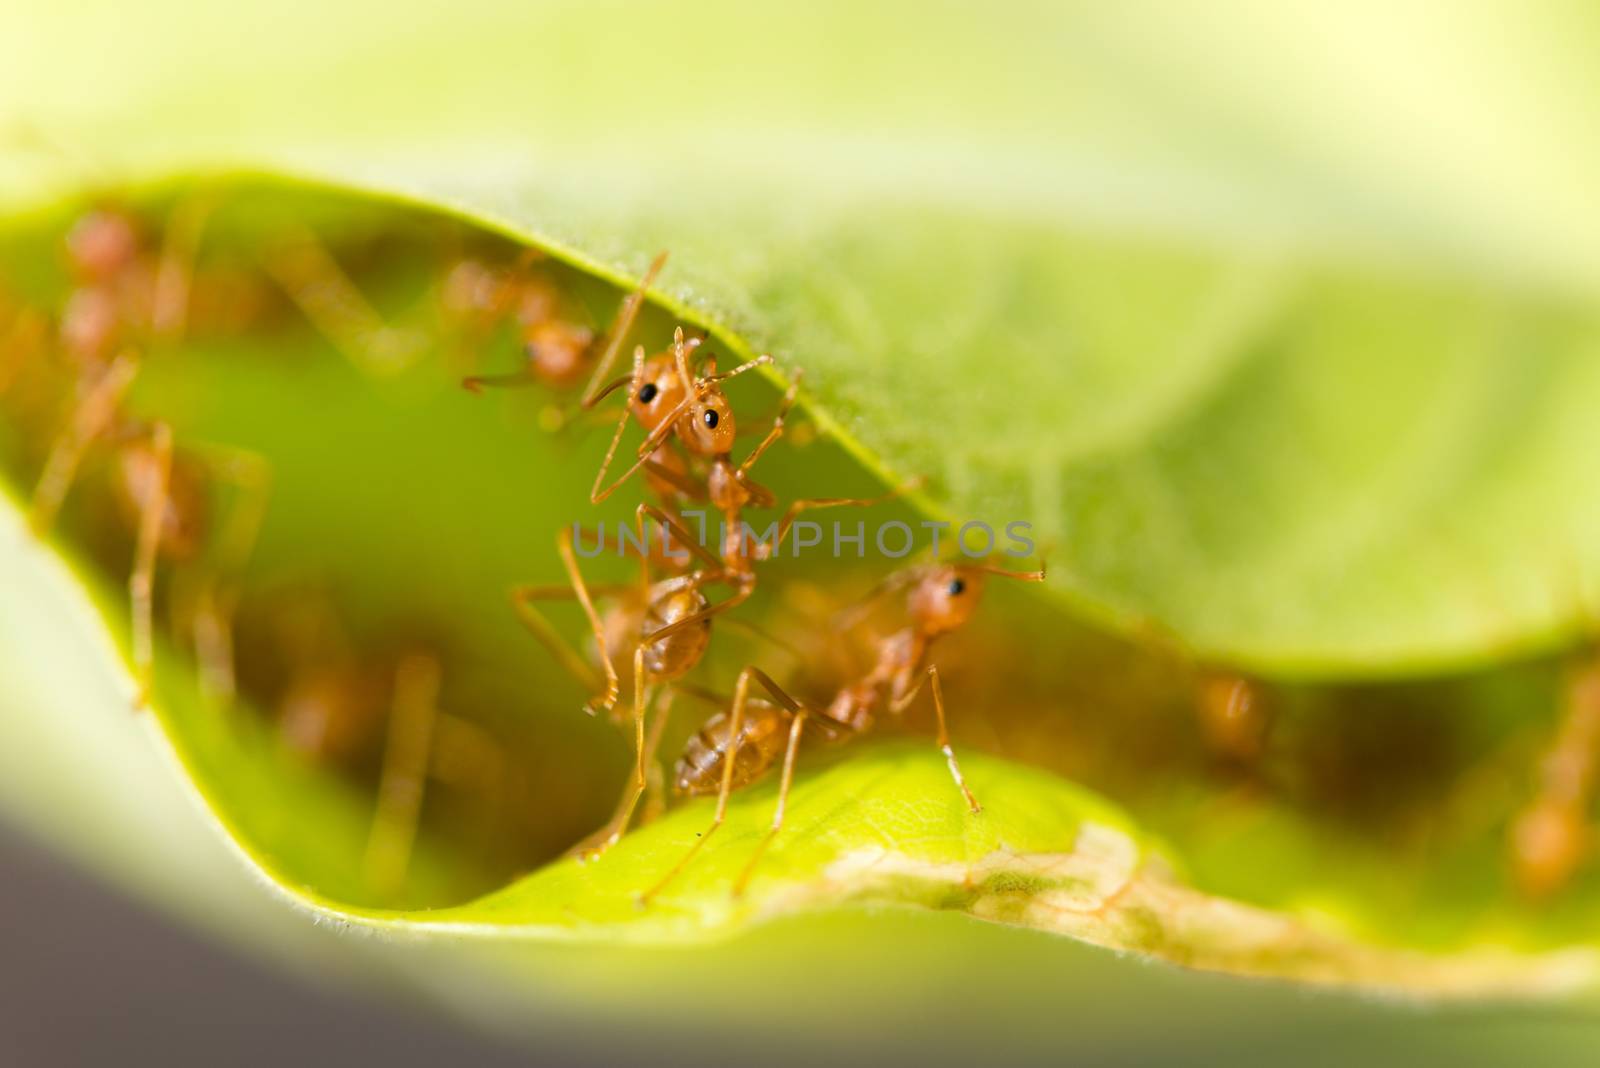 Weaver ants in green leaves by iryna_rasko